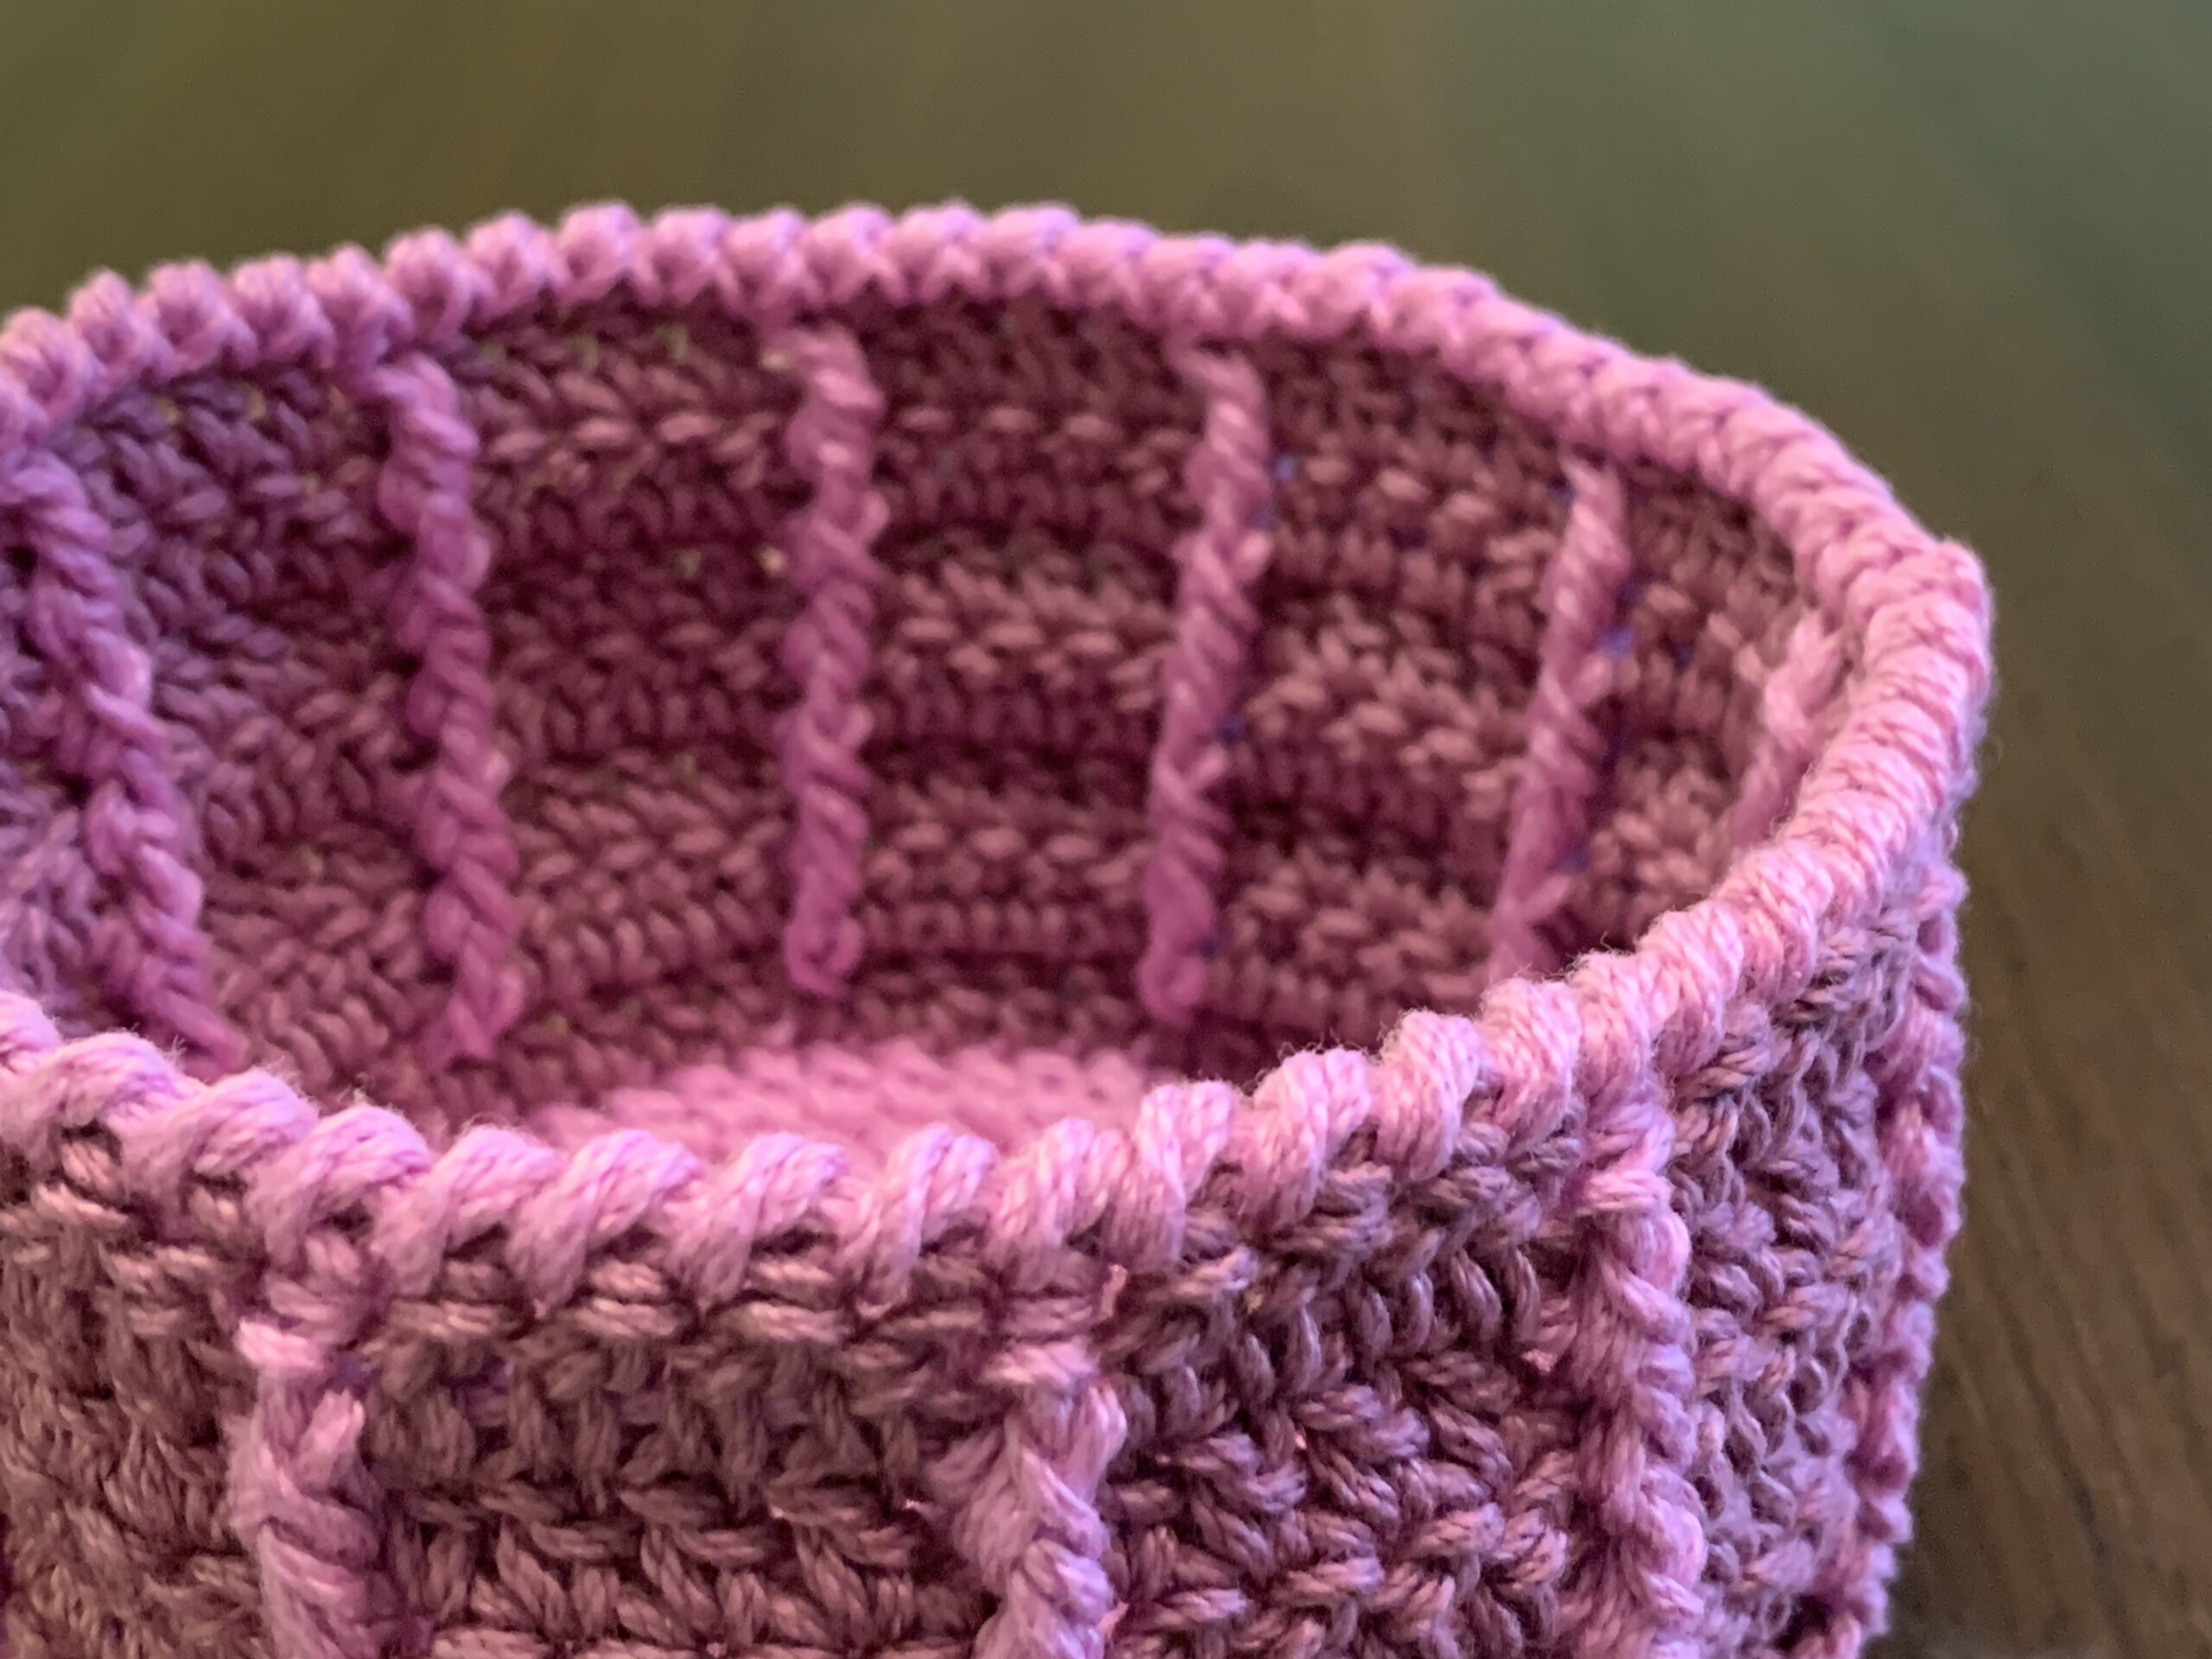 A purple basket with a crab stitch border around the rim